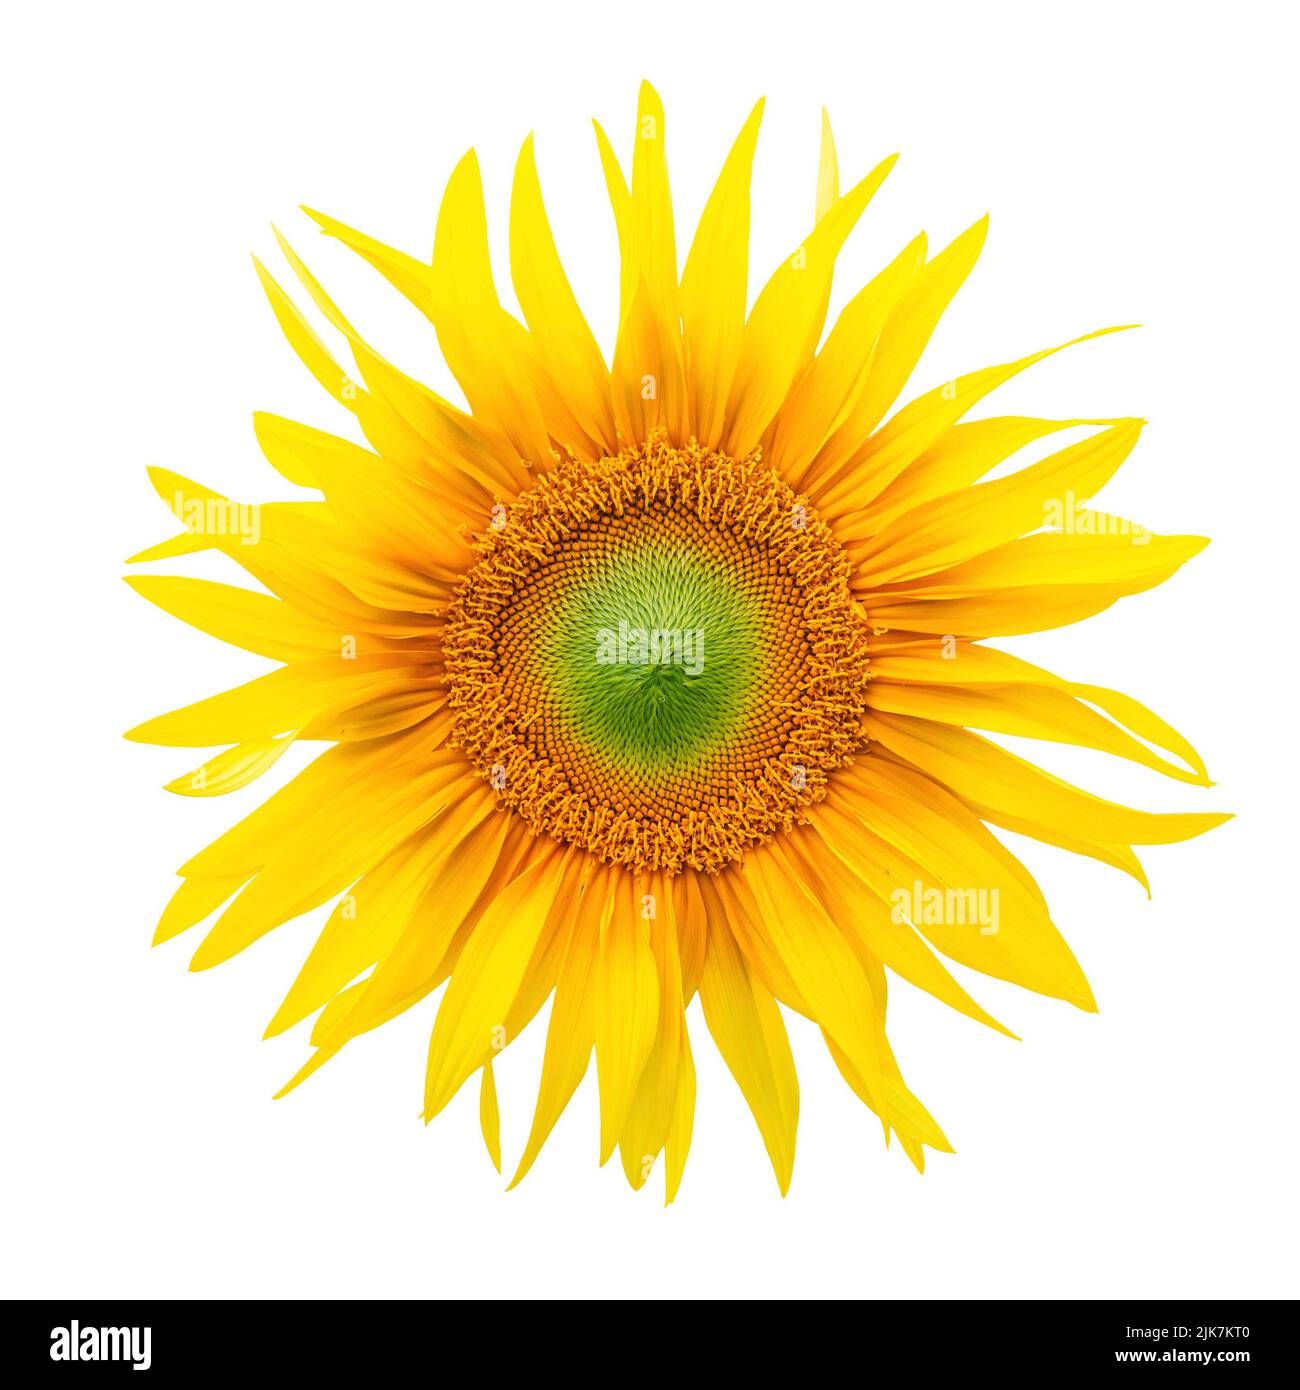 Sunflower flower head isolated over white background Stock Photo